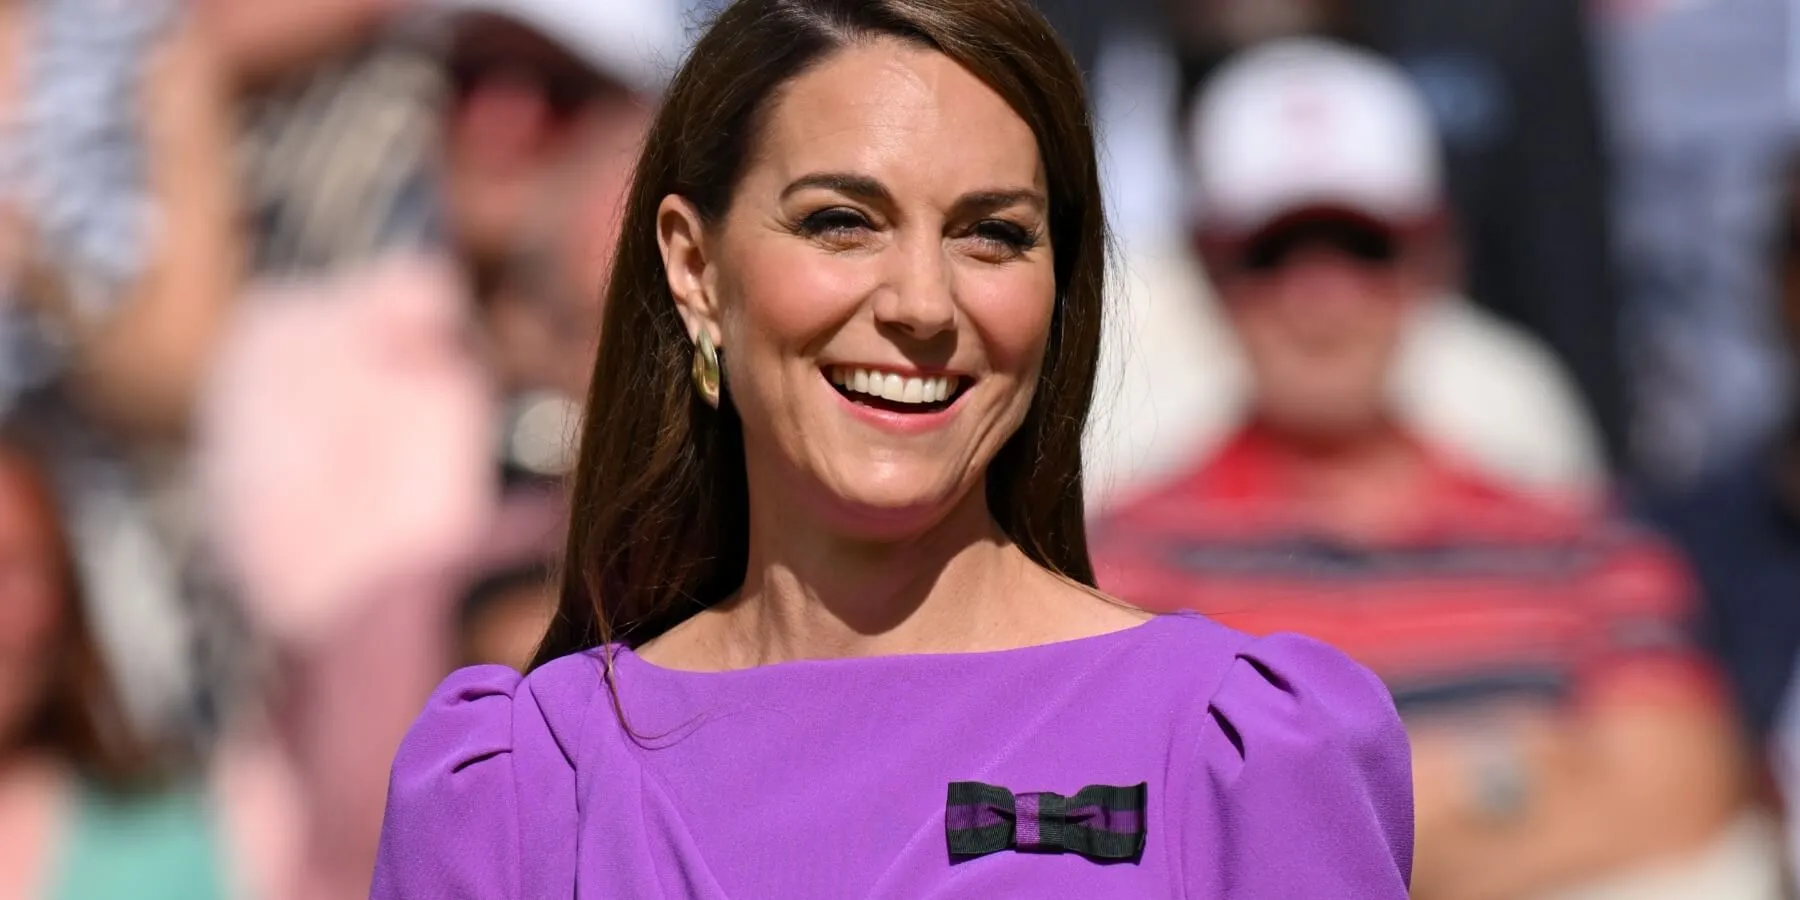 Kate Middleton makes a rare public appearance at Wimbledon.